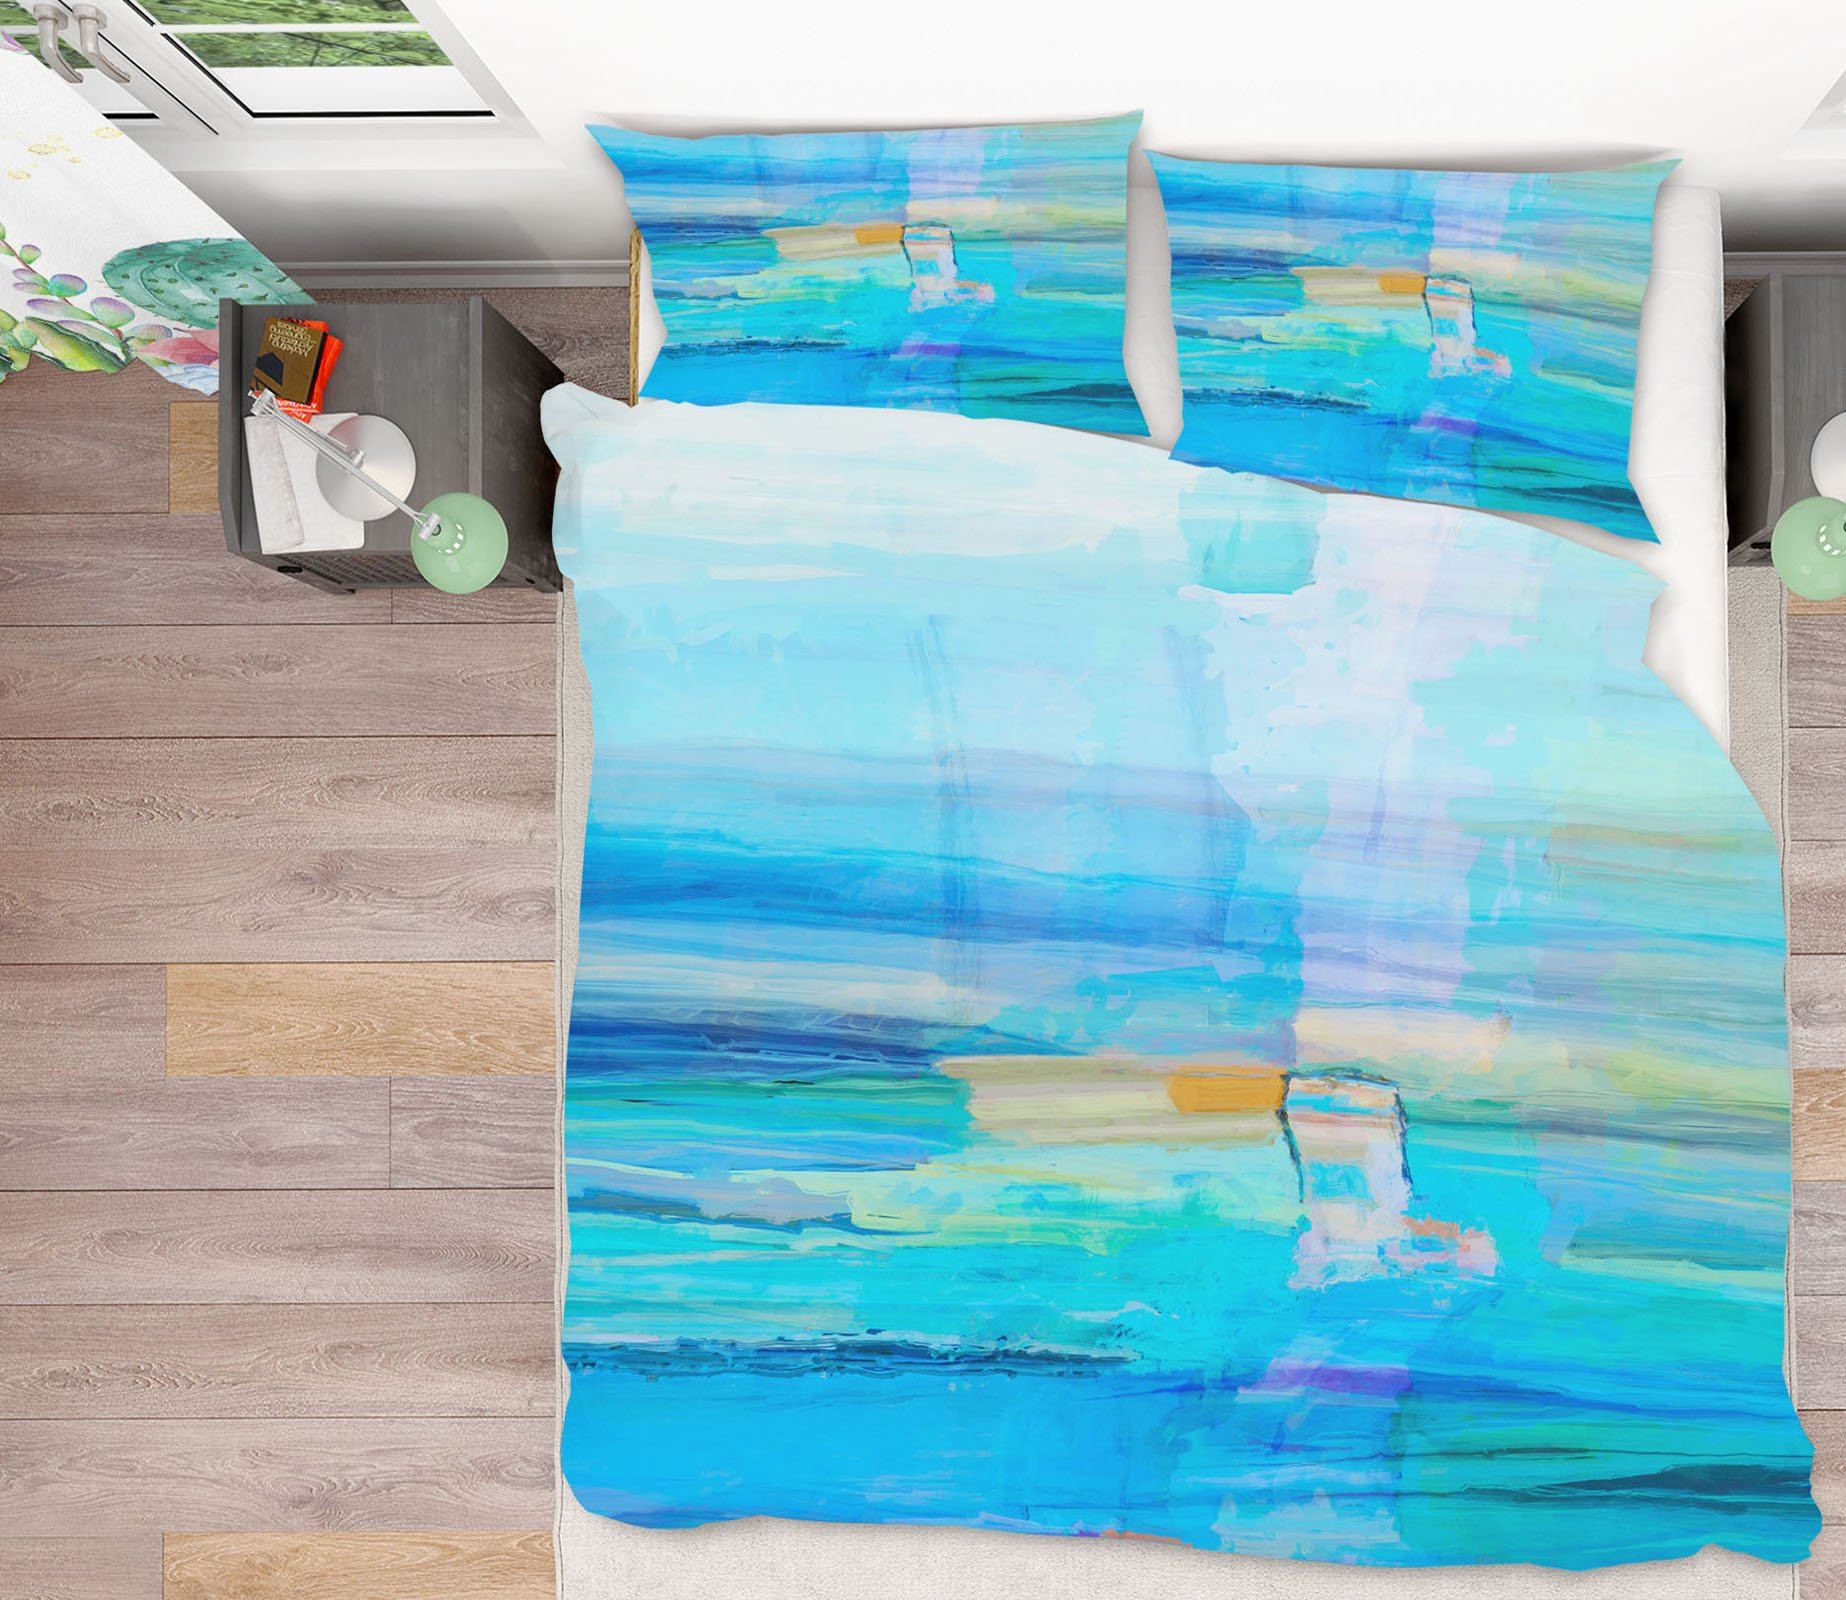 3D Blue Sea 2106 Michael Tienhaara Bedding Bed Pillowcases Quilt Quiet Covers AJ Creativity Home 